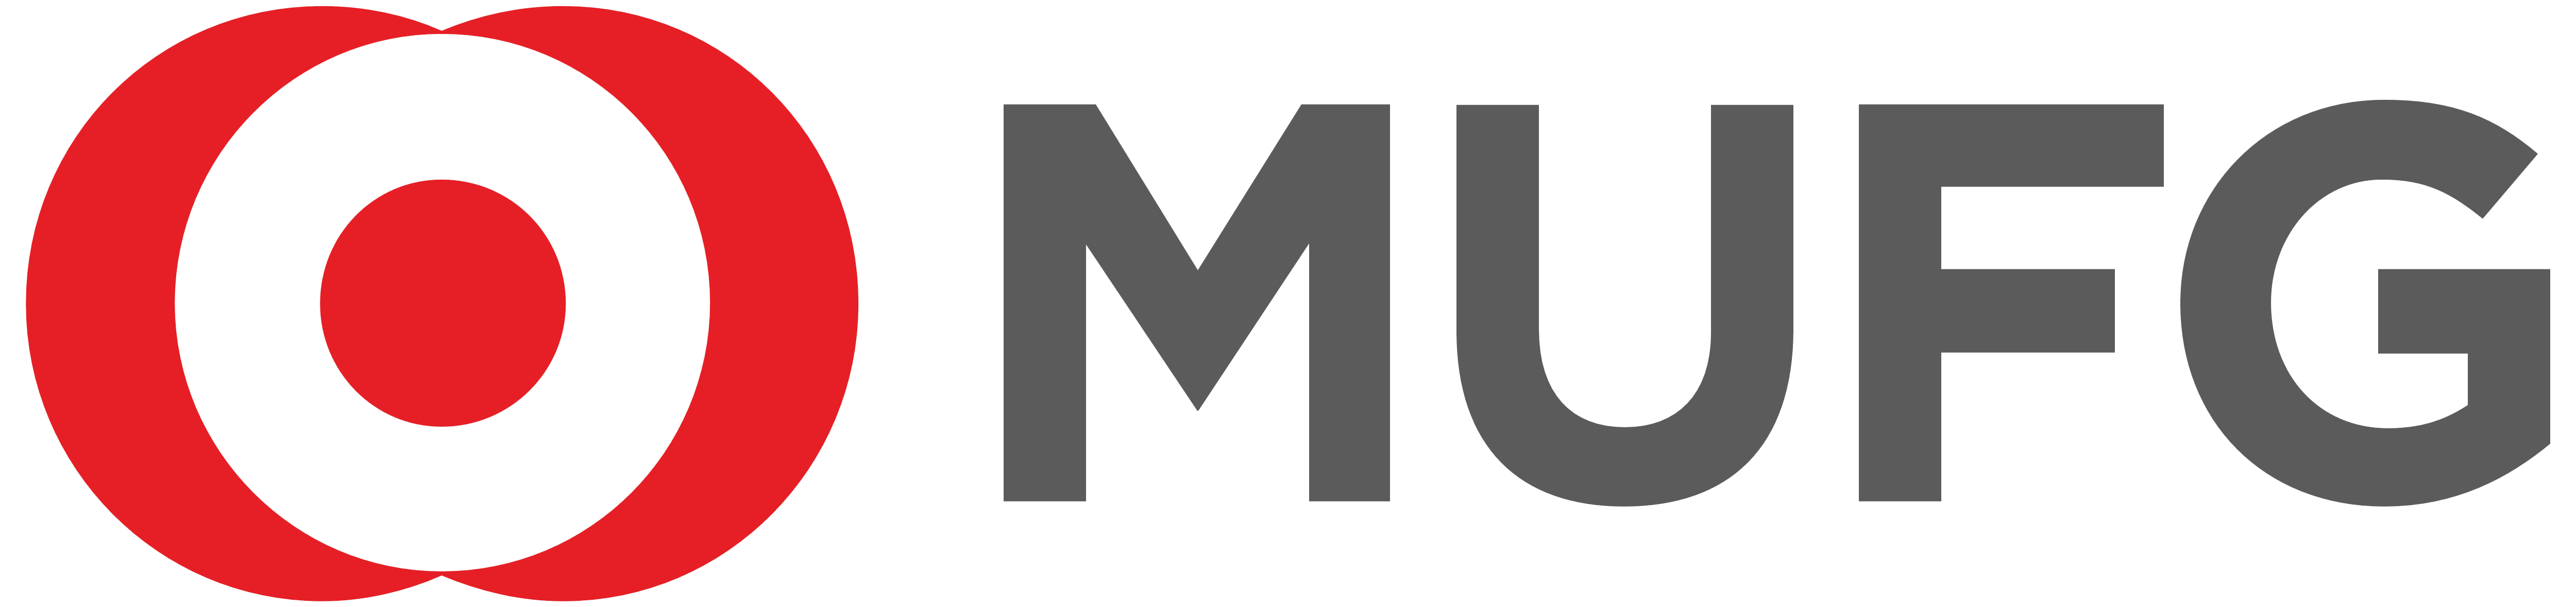 MUFG -Mitsubishi UFJ Financial Group, Mufg PNG - Free PNG